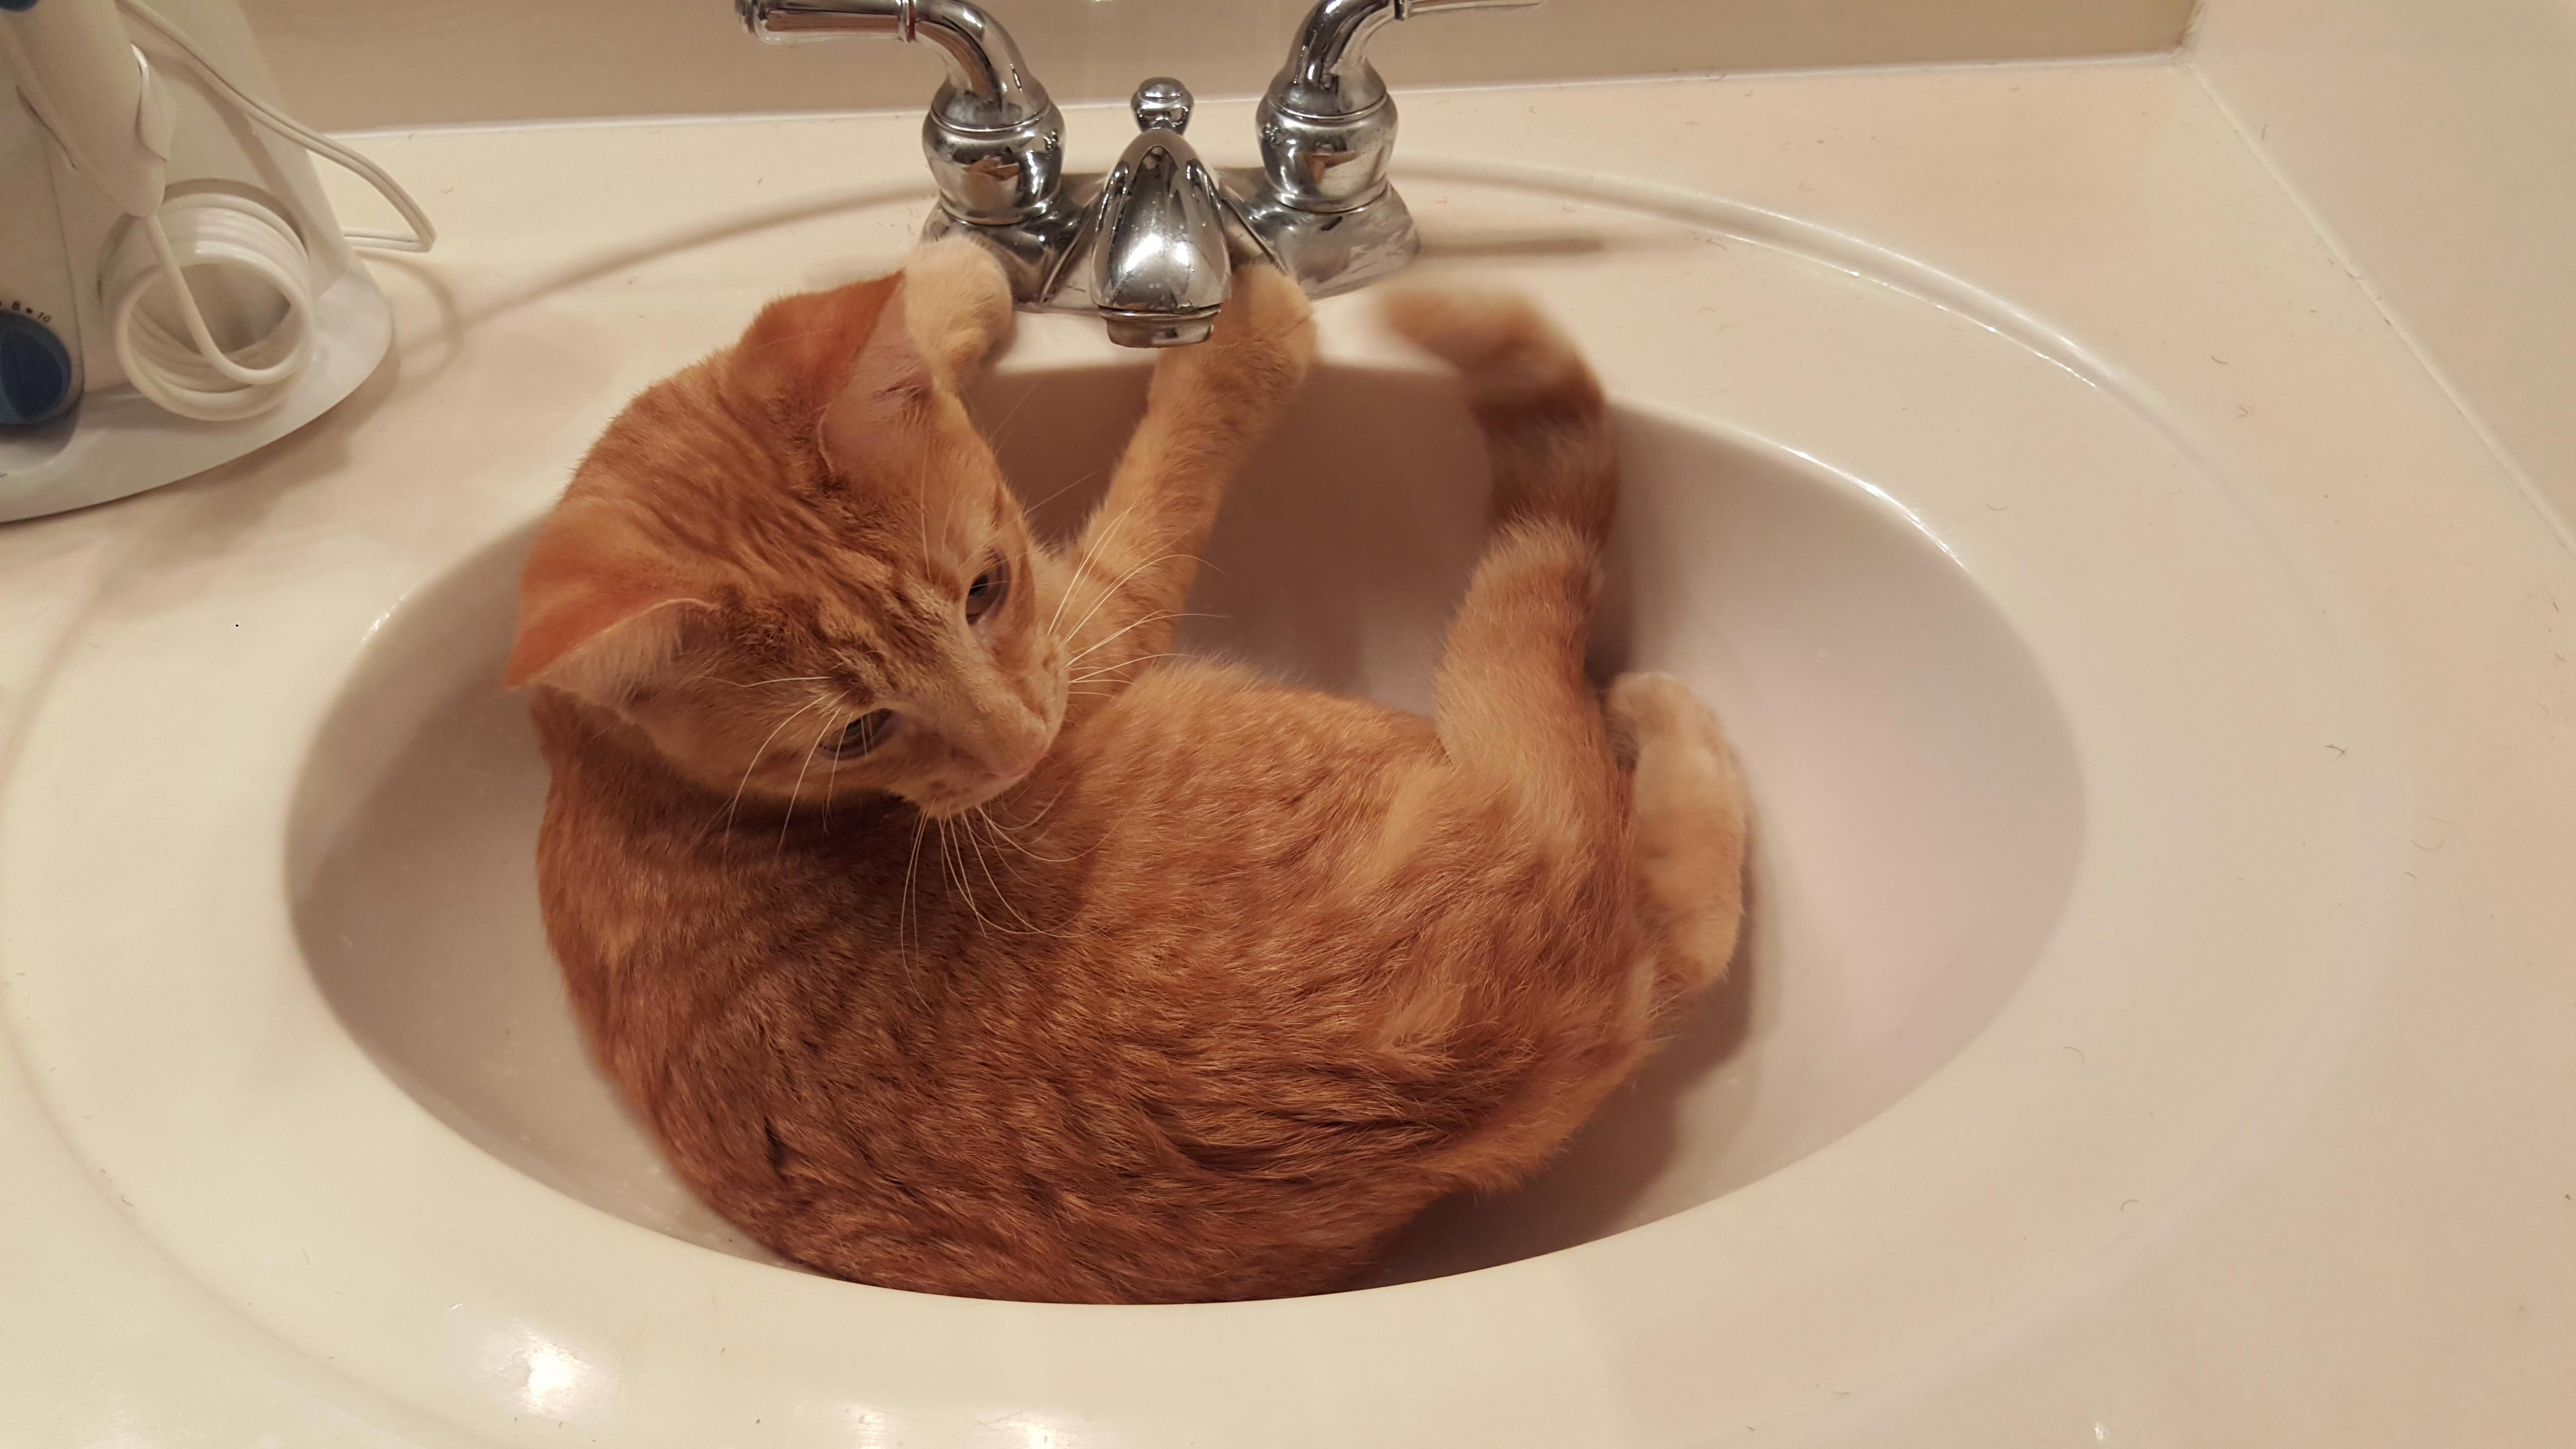 Tigger loves the sink